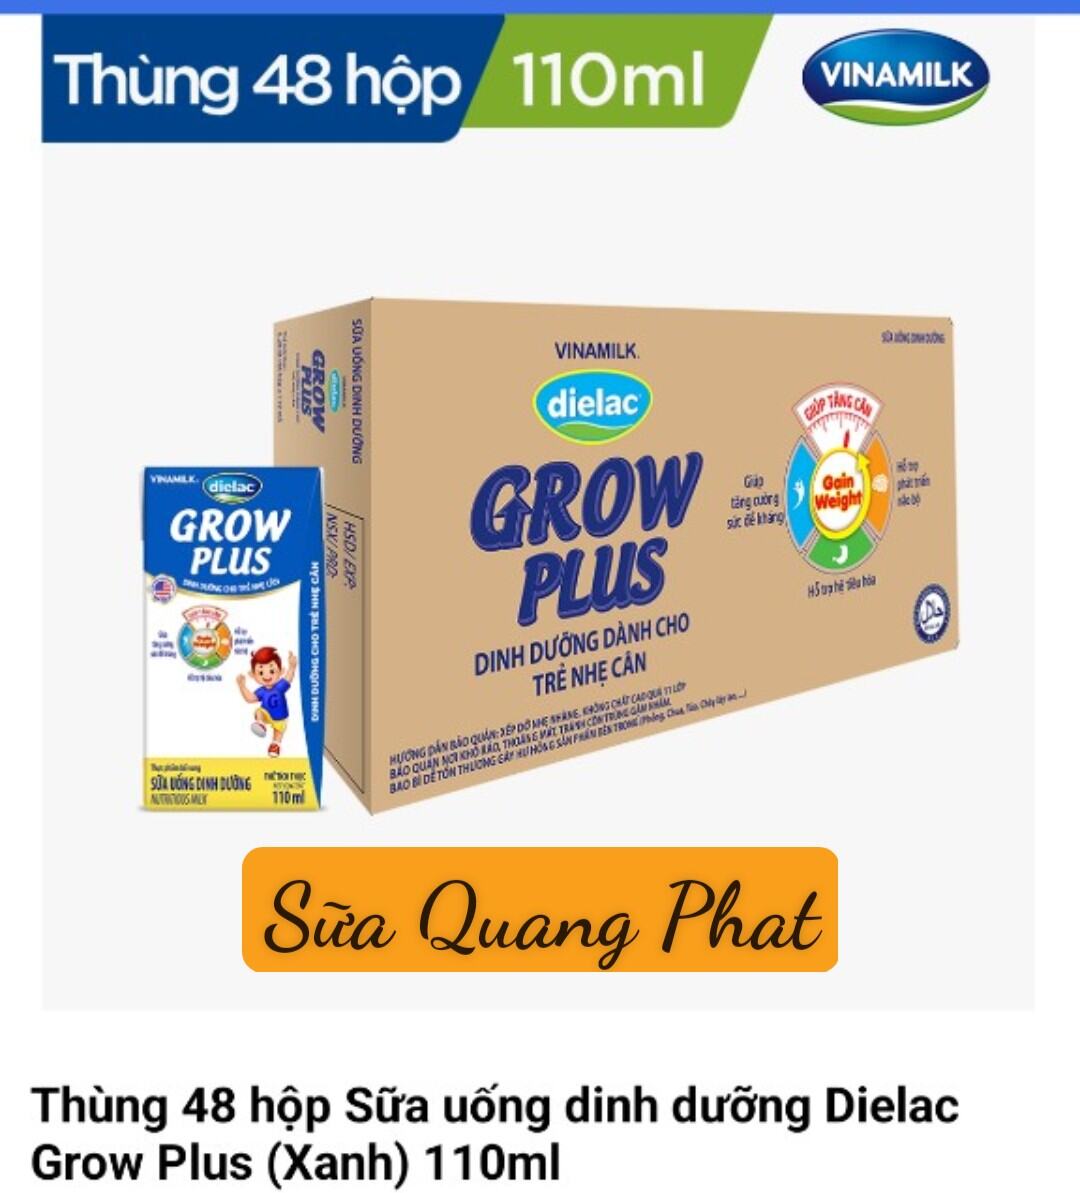 Thùng 48 hộp Sữa bột pha sẵn Dielac Grow Plus Xanh 110ml